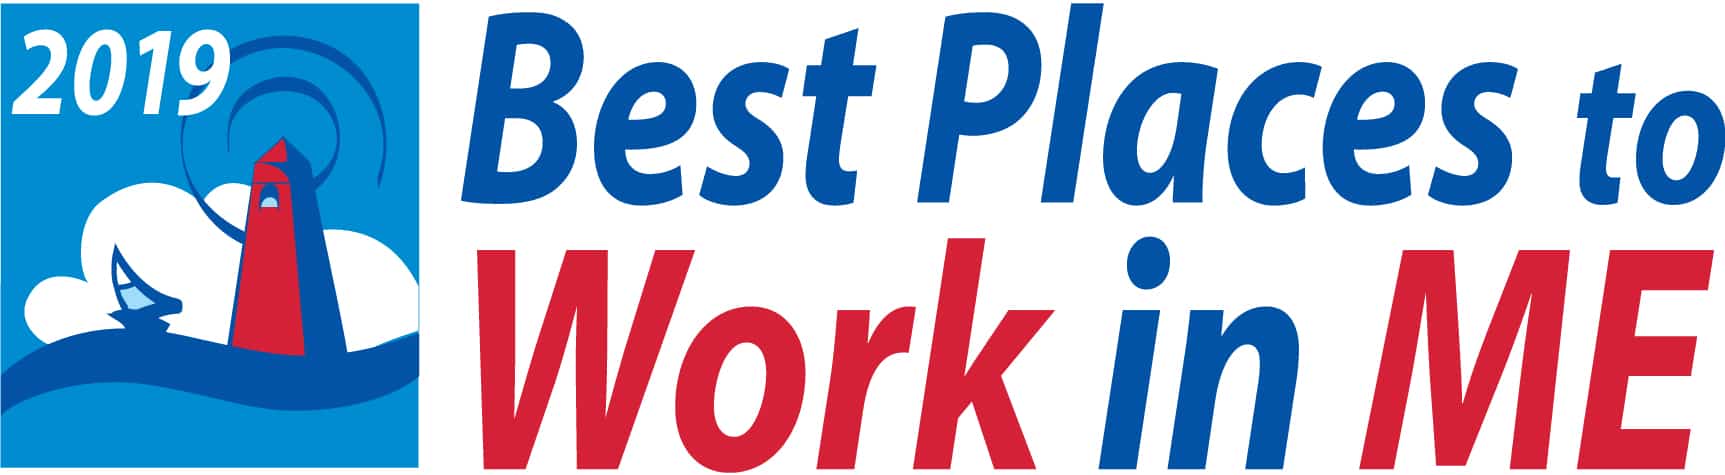 BPTW_Maine_2019_logo